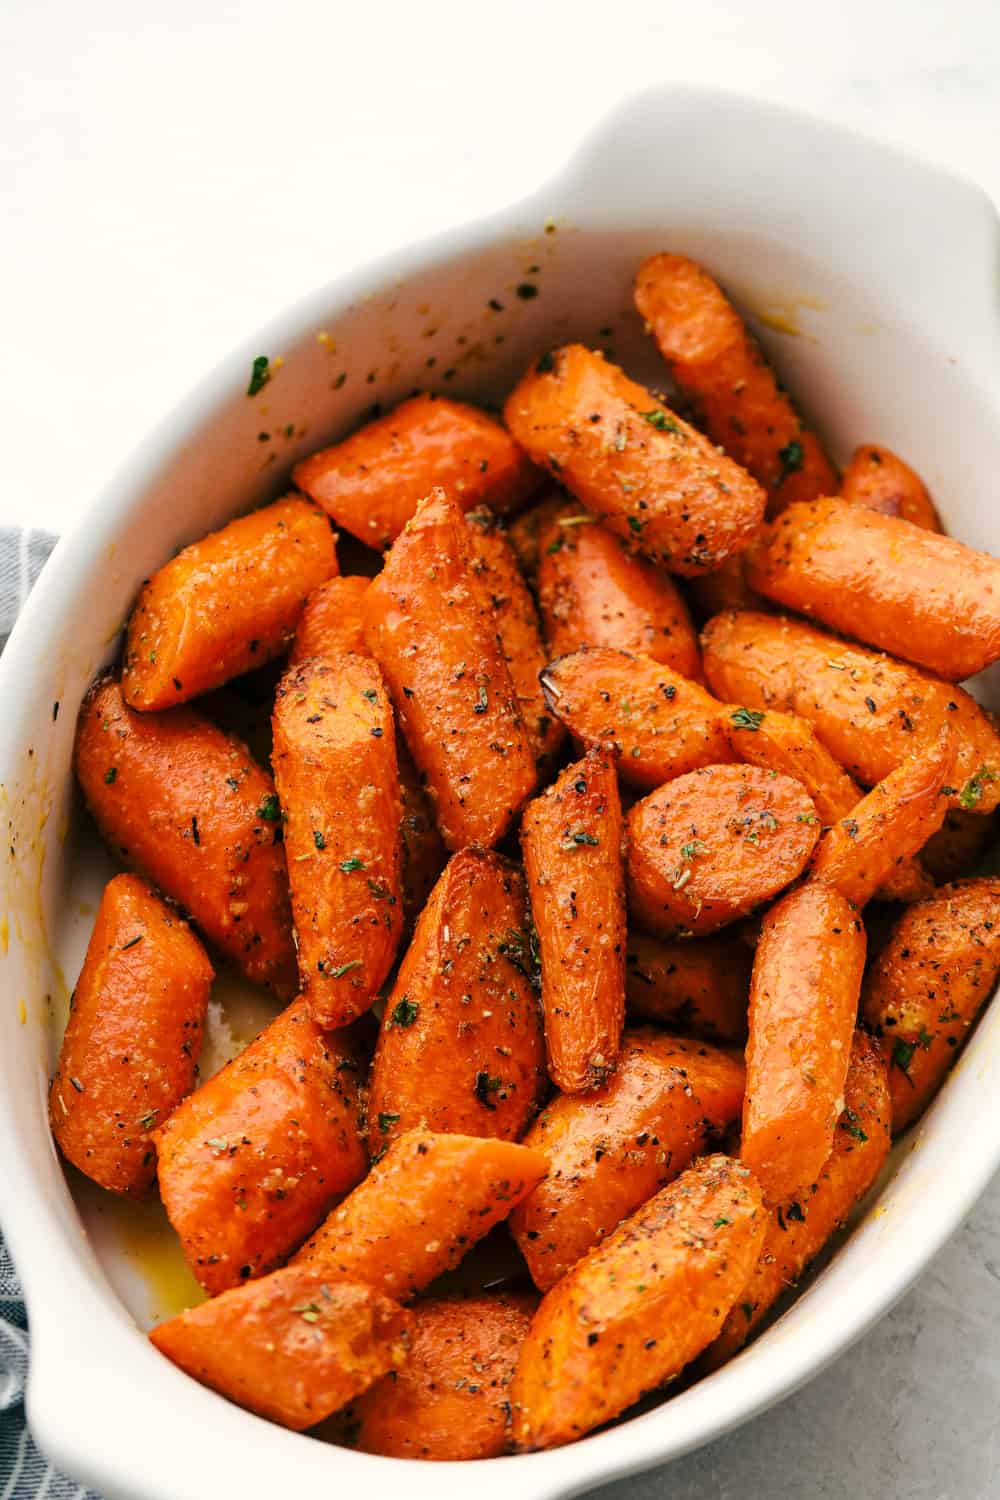 Zanahorias cocidas en un plato blanco.